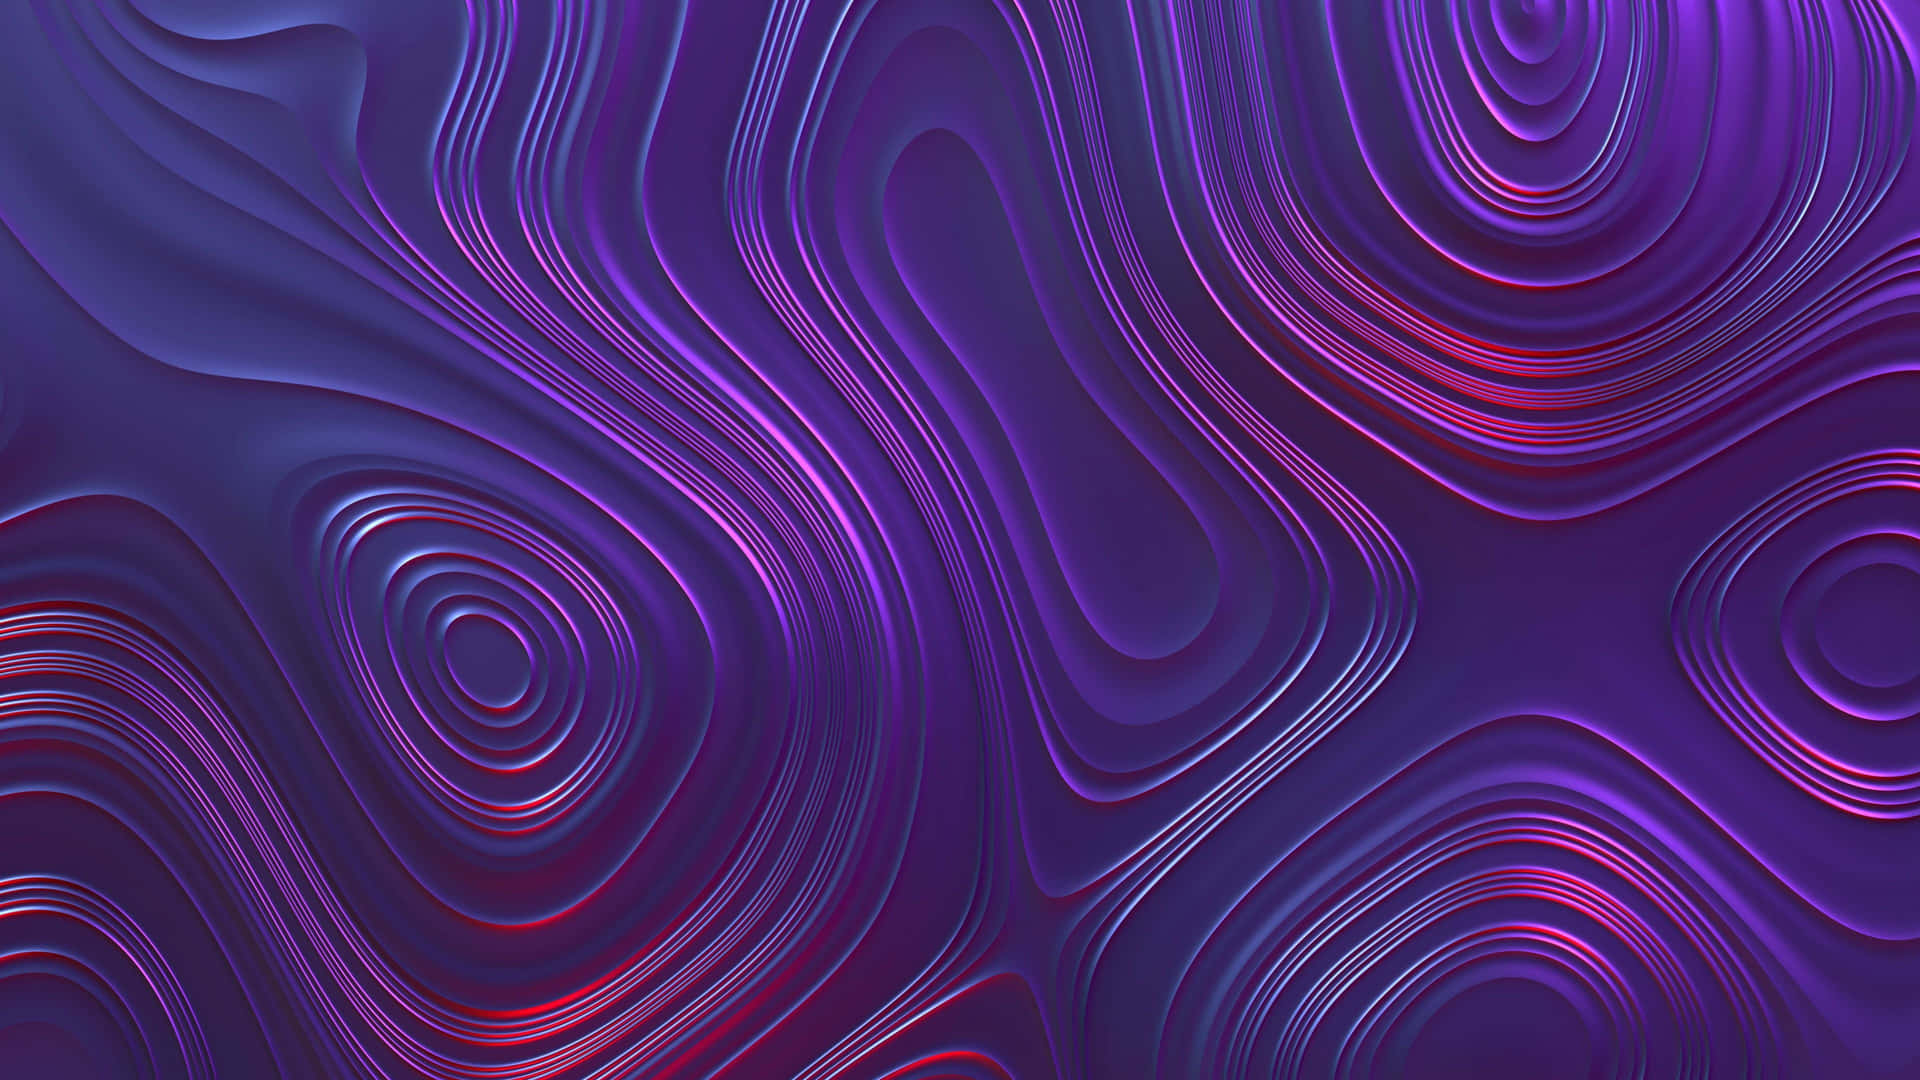 Geometric Shapes in Bright Purple Splash Wallpaper